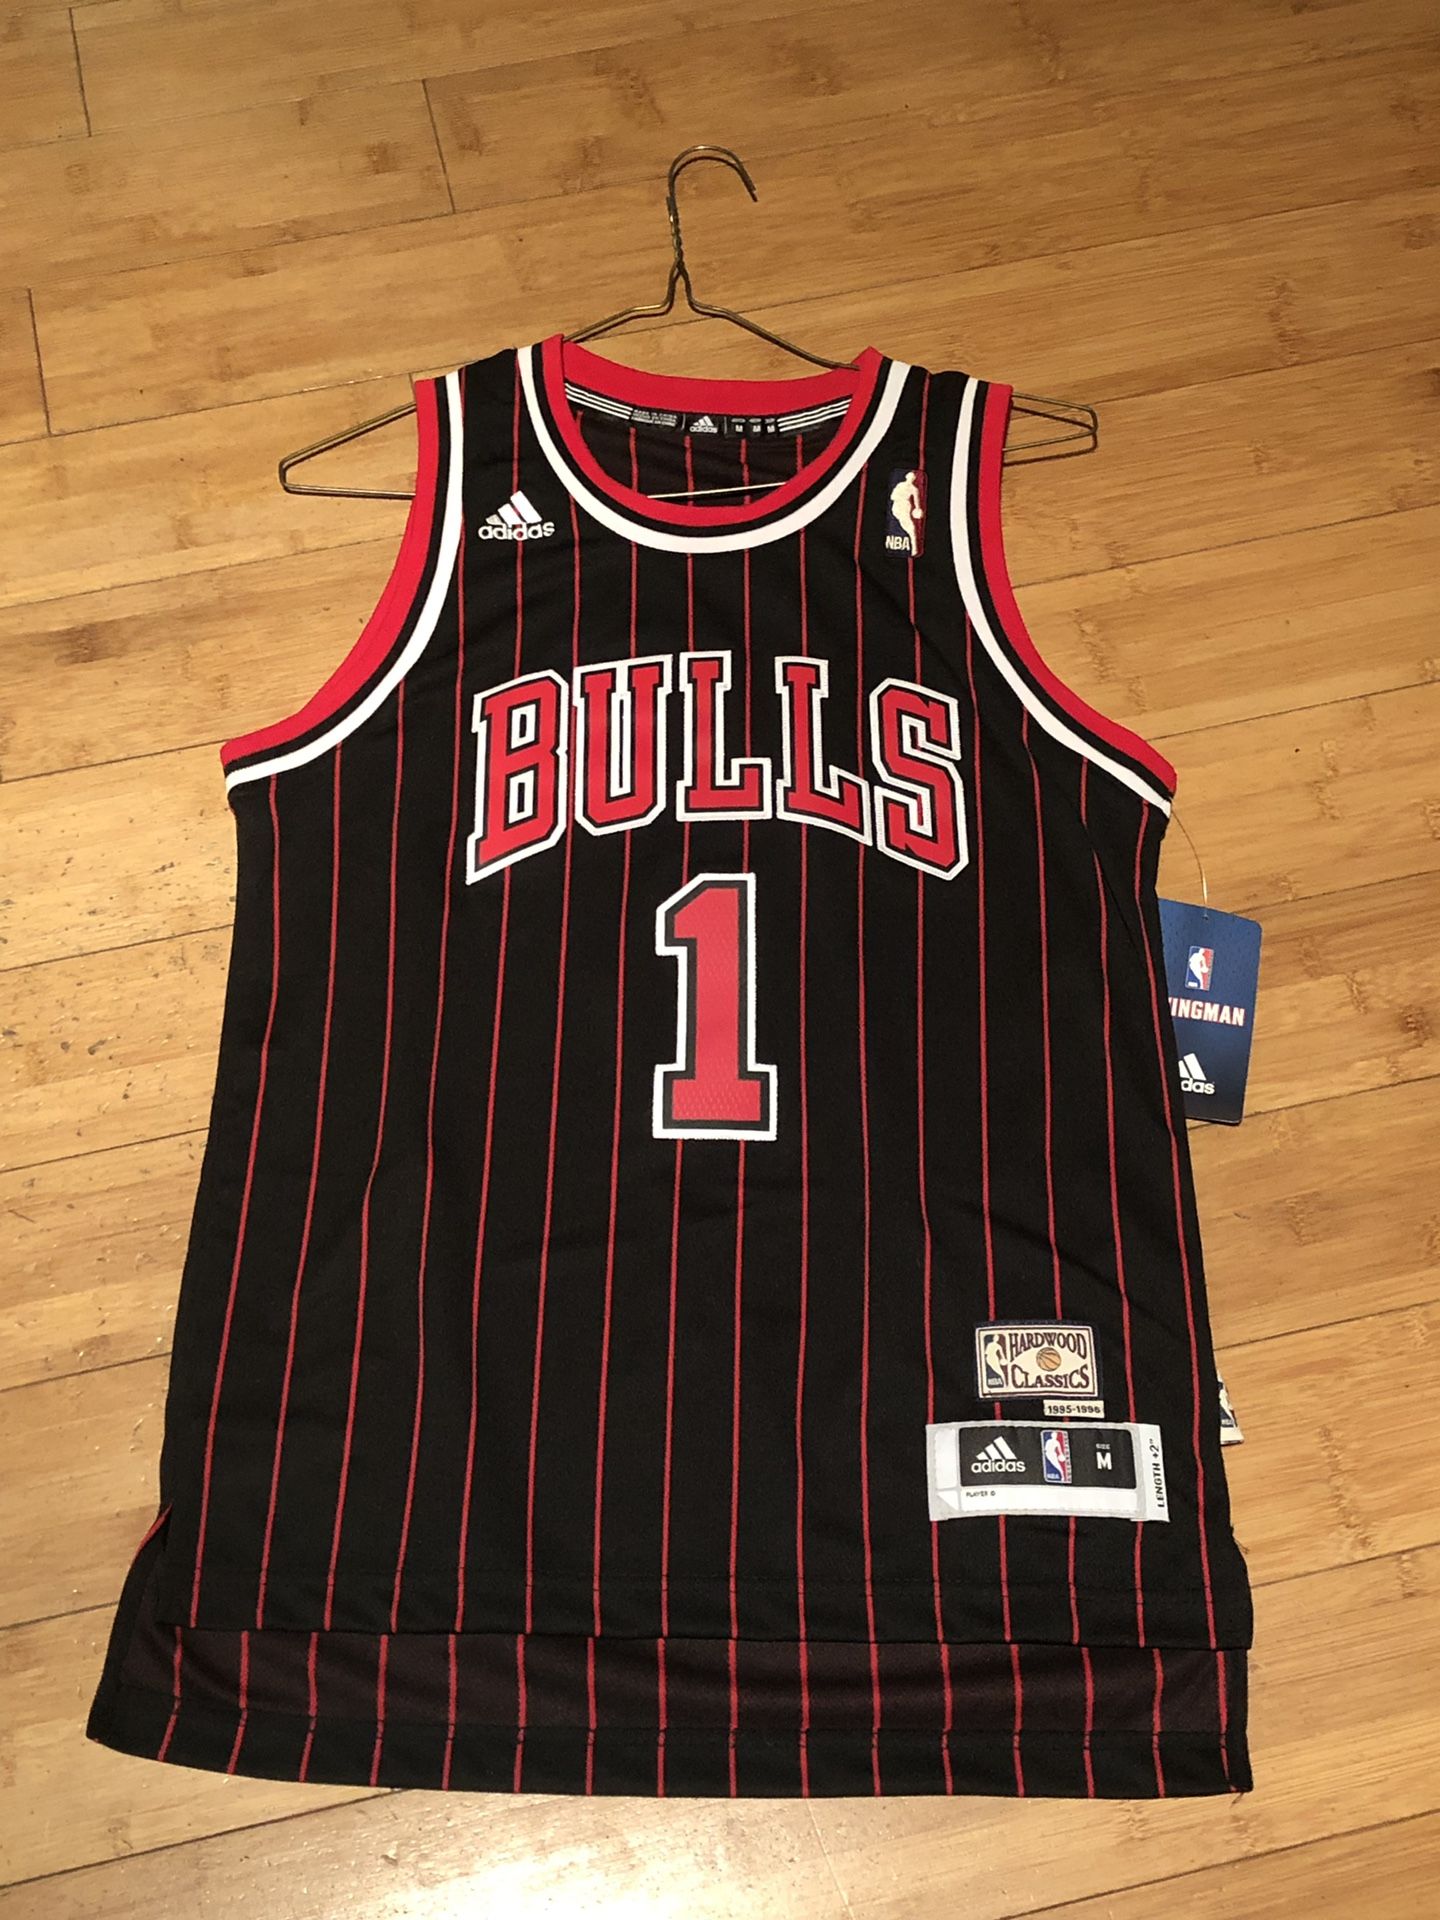 Chicago Bulls Rose 1 basketball jersey - Adidas